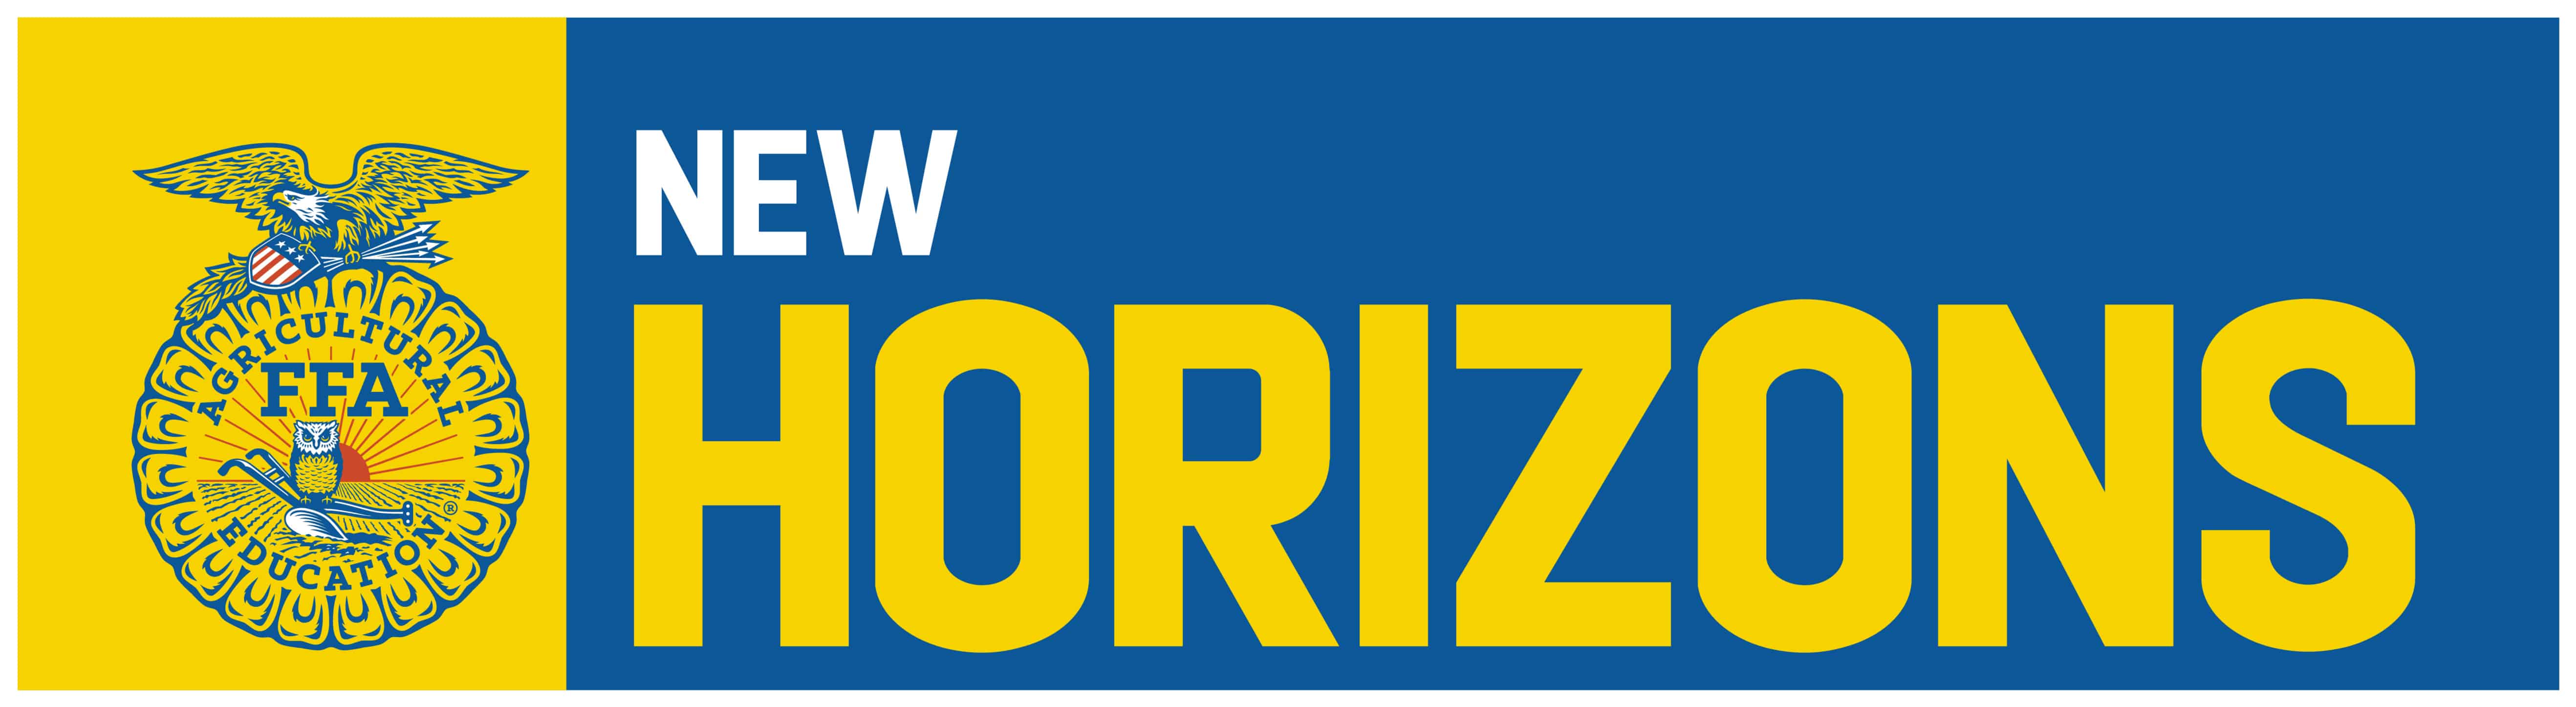 FFA New Horizons Logo 1989